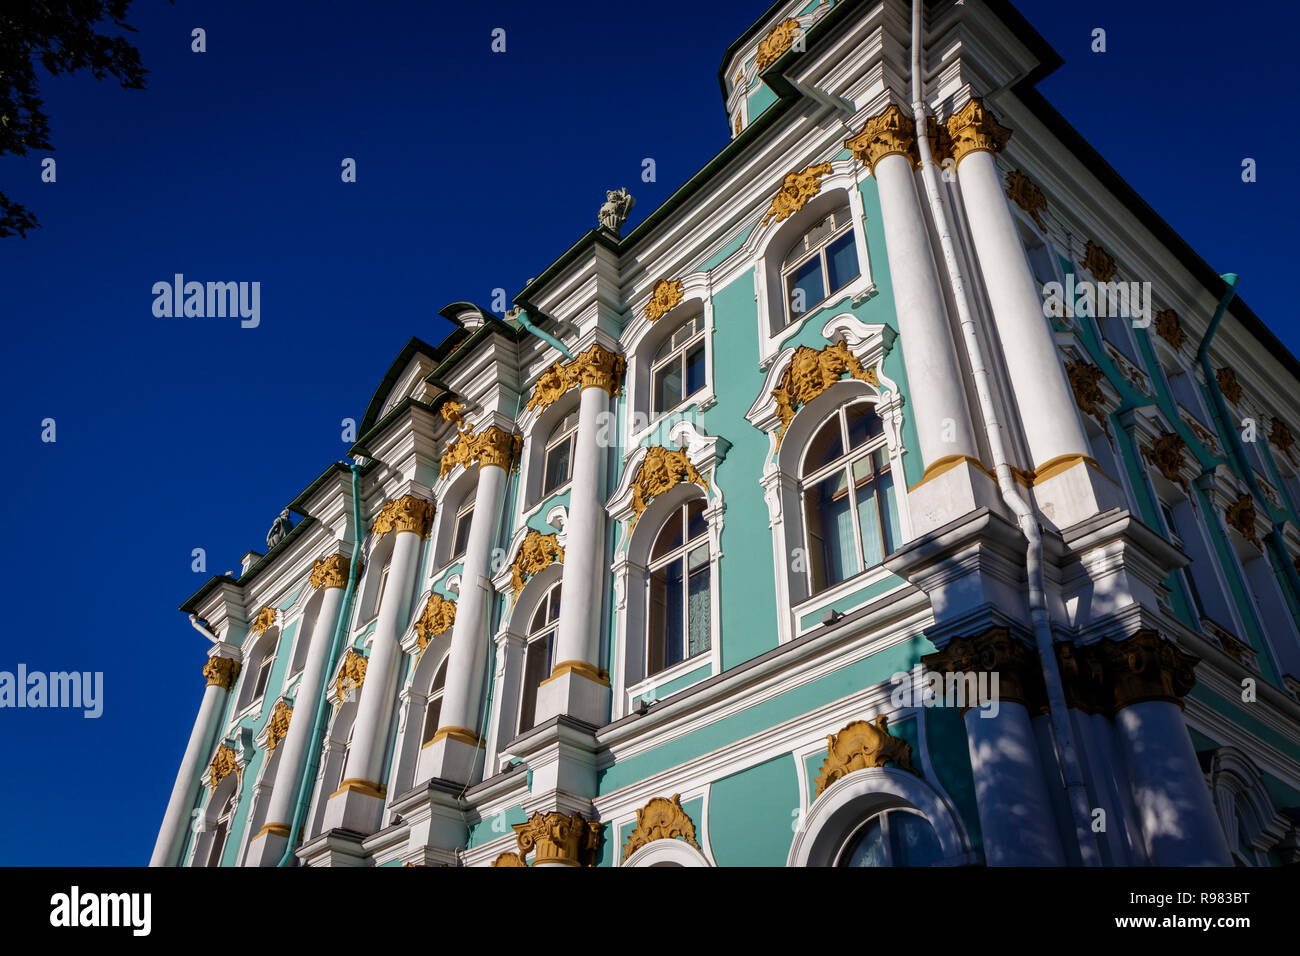 The 1762 Winter Palace and State Hermitage Museum on Palace Square, St Petersburg, Russia. Architect, Italian Francesco Bartolomeo Rastrelli. Stock Photo